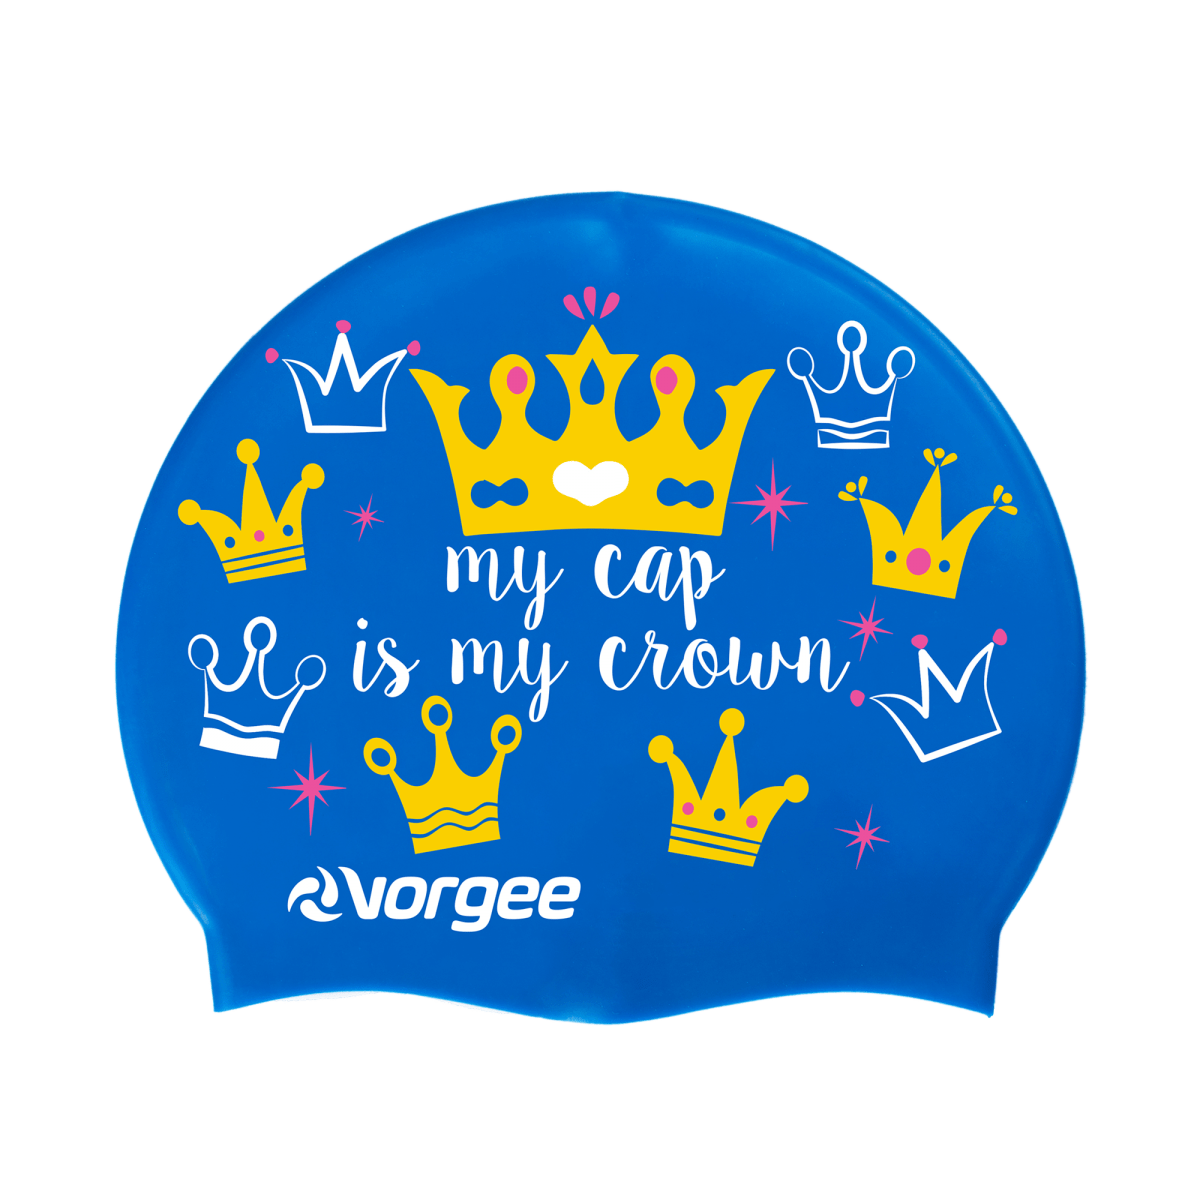 Vorgee Miss Glamour Swim Cap by Vorgee - Ocean Junction